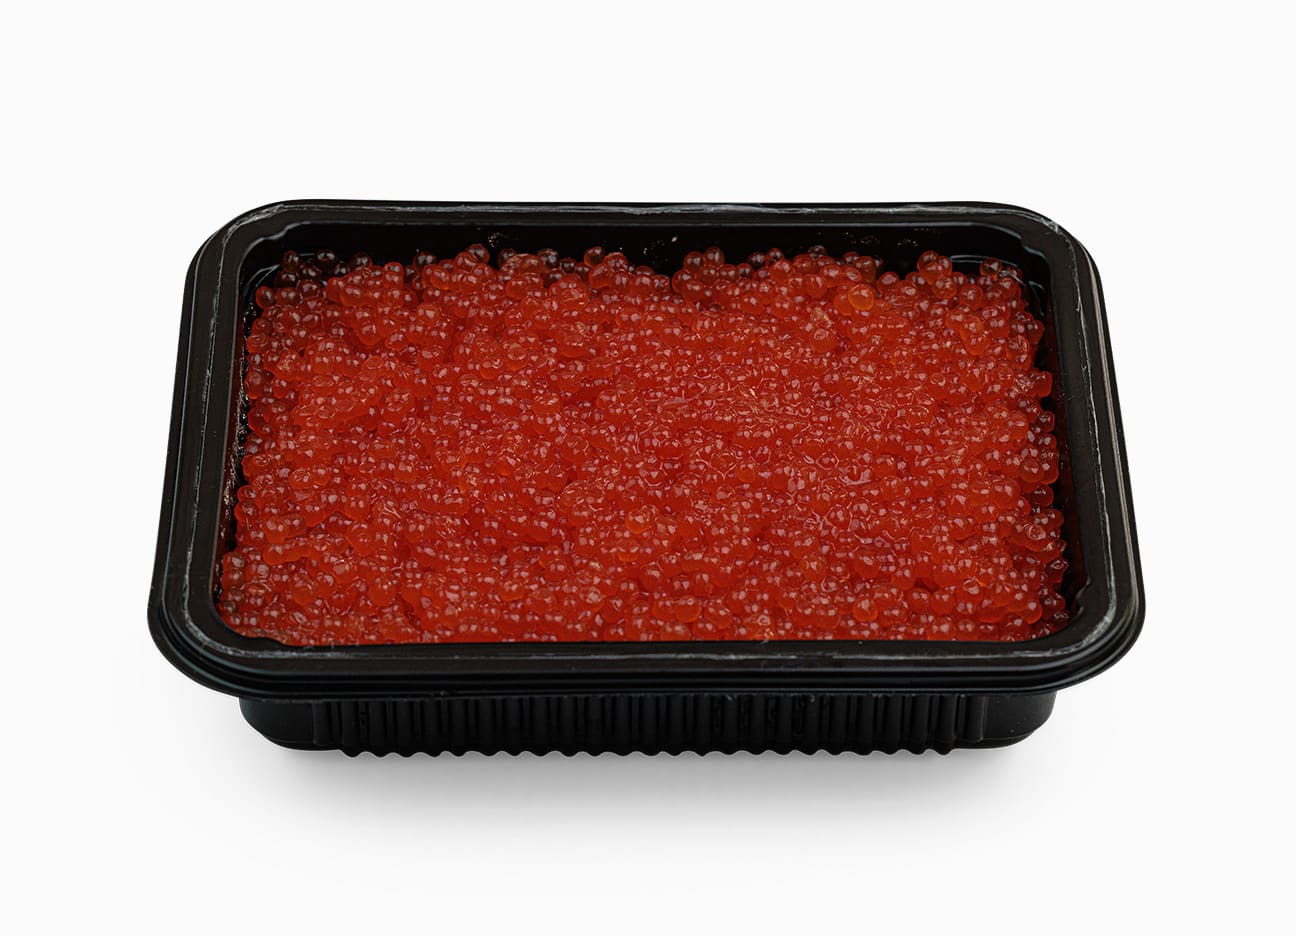 Wild Alaskan Pink Salmon Caviar Peter Pan (Grade 1) 35.2 oz in an open package.